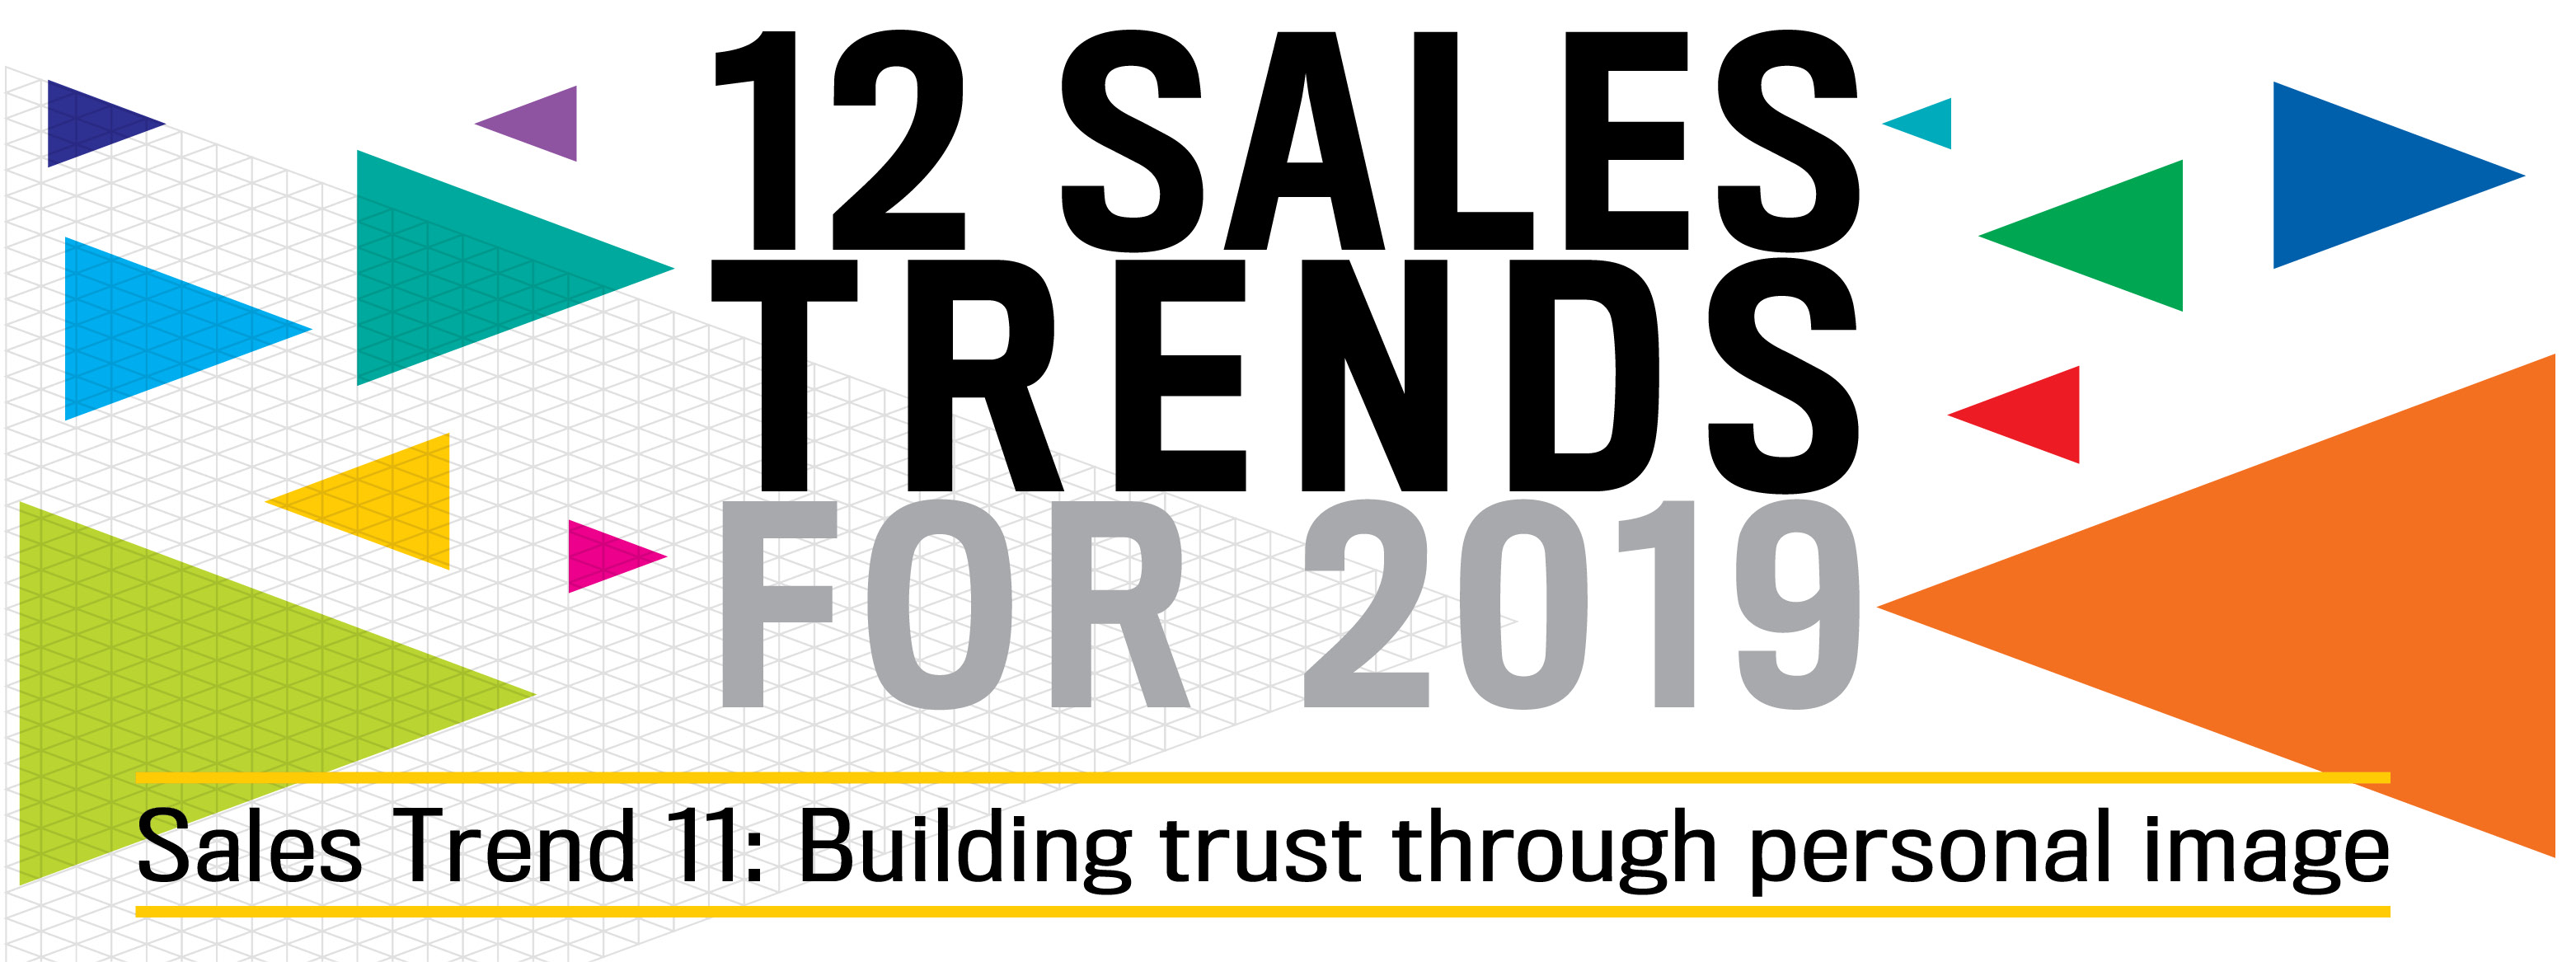 barrett_sales_trends_2019_Trend_11_Building_trust_through_personal_image